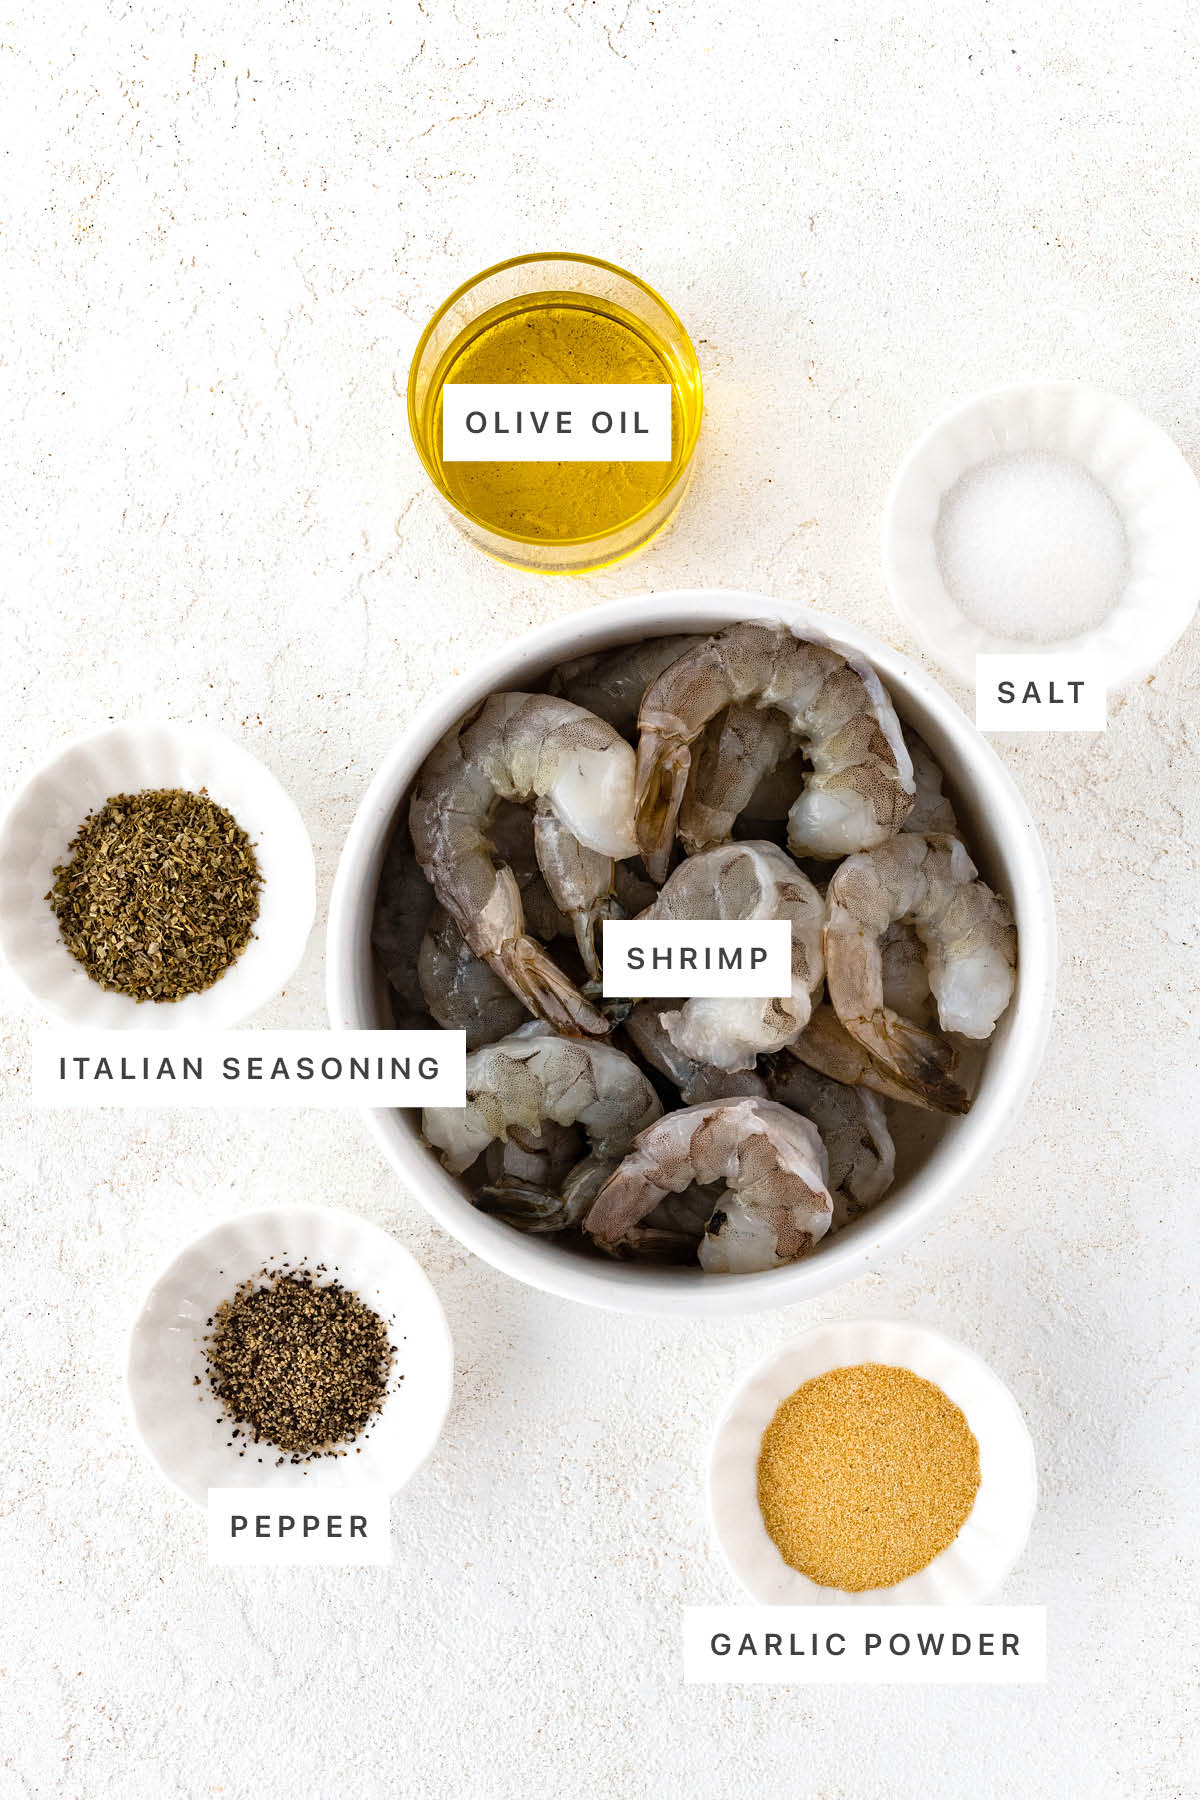 Ingredients measured out to make Air Fryer Shrimp: olive oil, salt, Italian seasoning, shrimp, pepper and garlic powder.